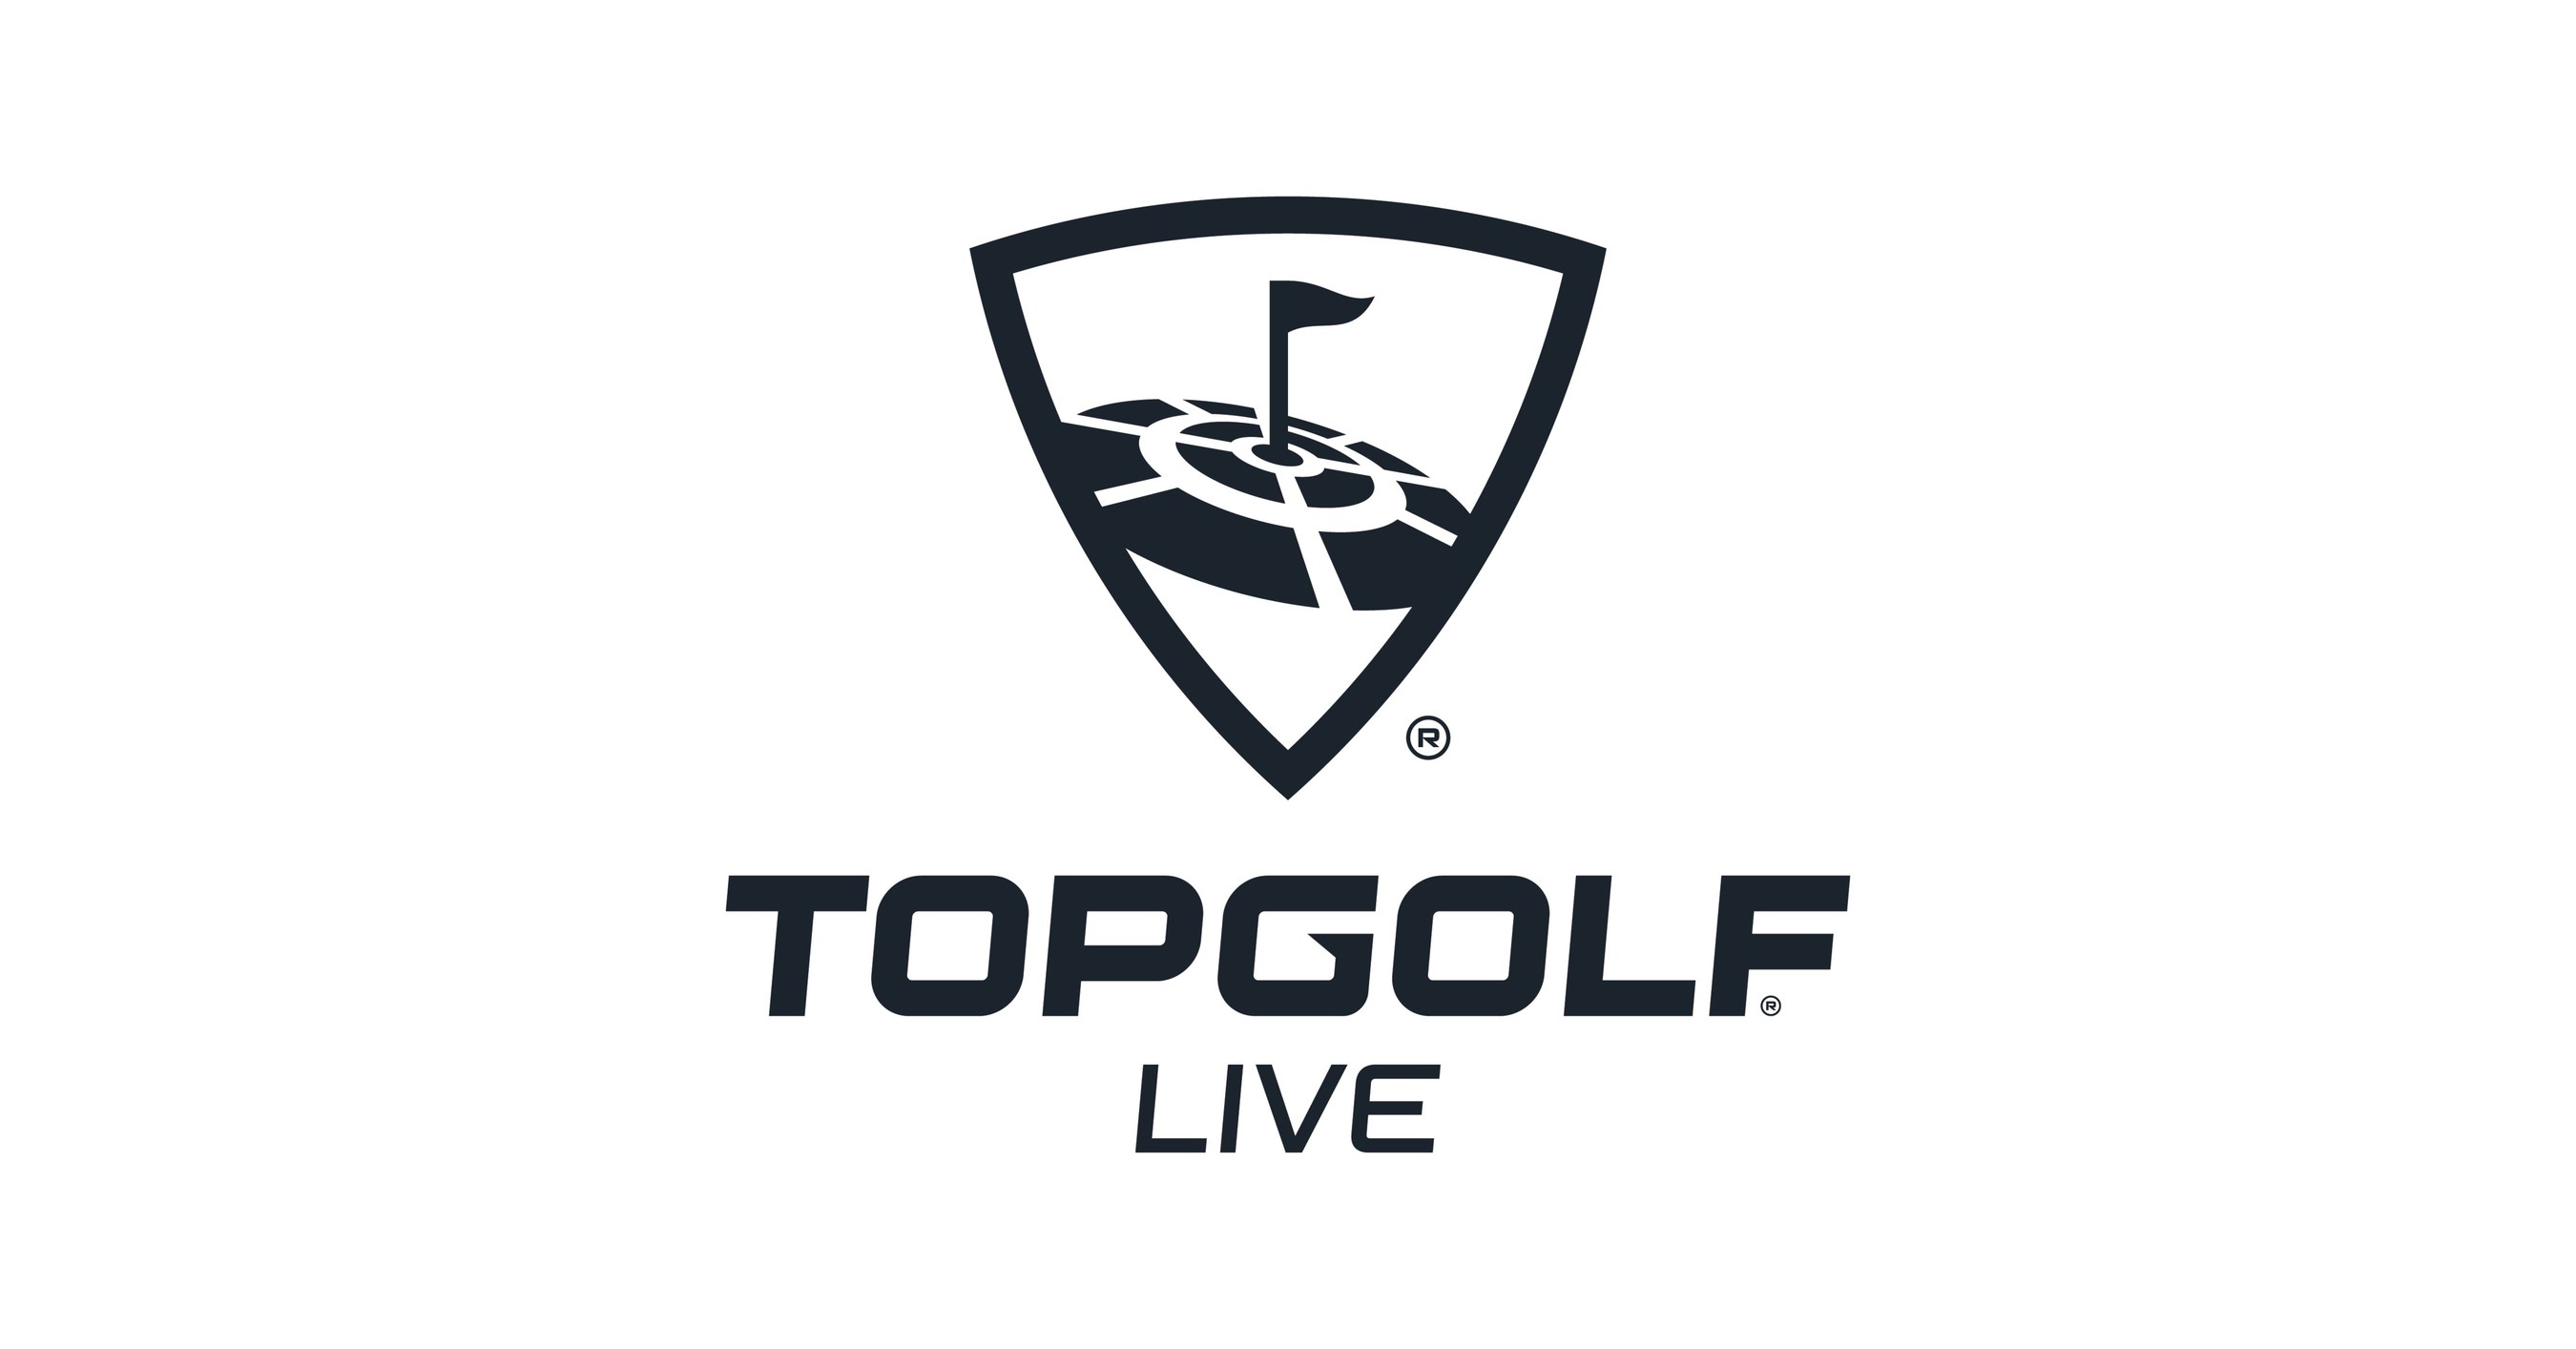 Topgolf live stadium tour set for Progressive Field 